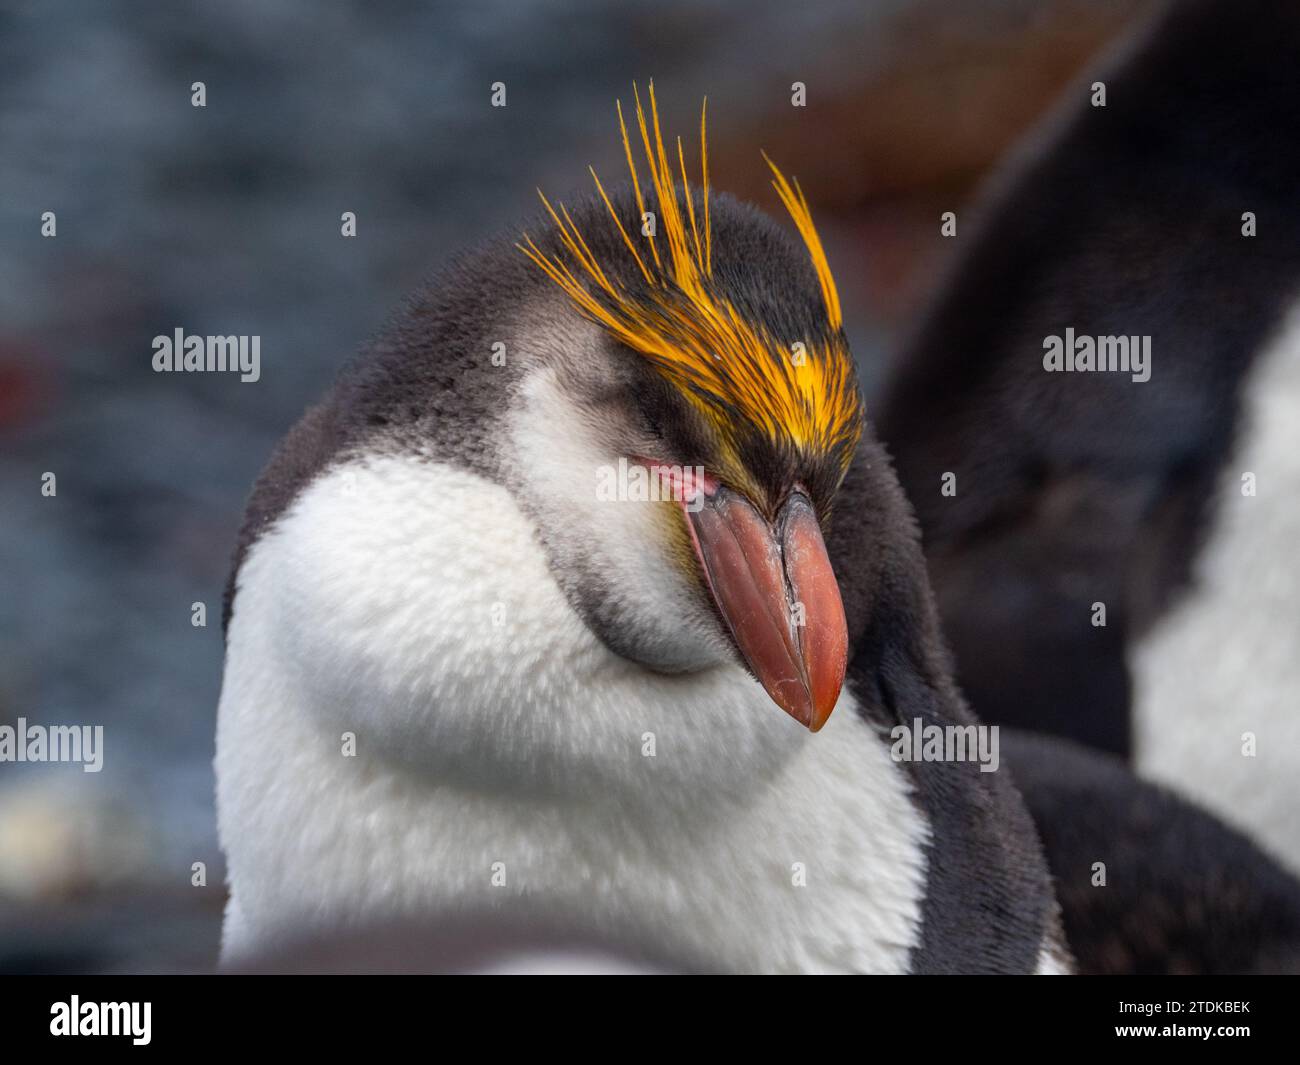 Royal Penguin, Eudyptes schlegeli, Macquarie Island, Australia Stock Photo